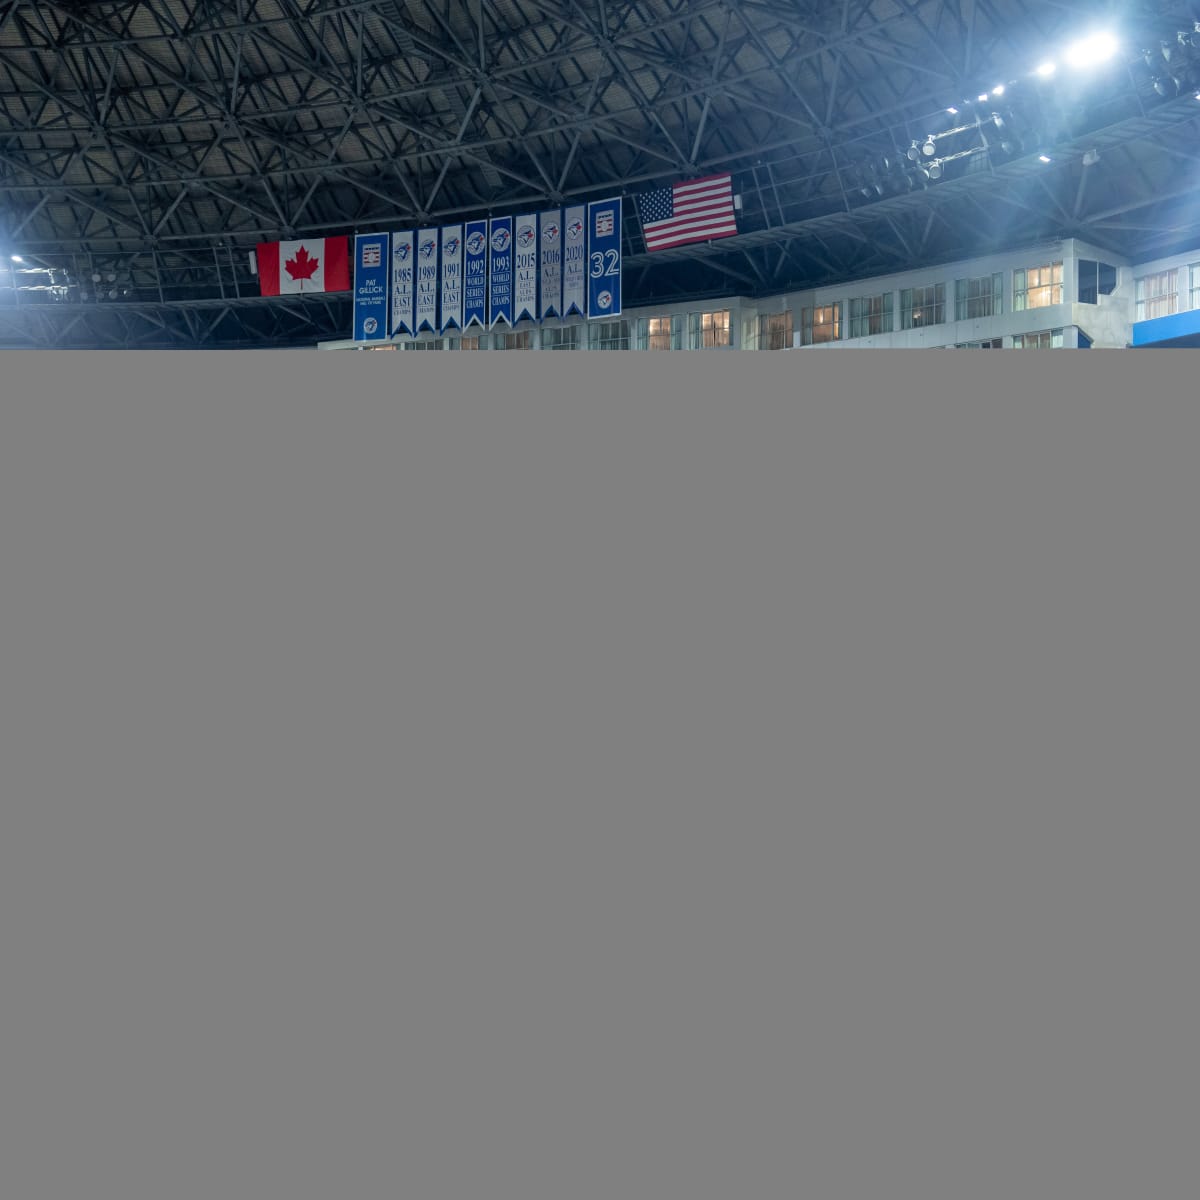 Blue Jays unveil details, renderings for 2023 Rogers Centre